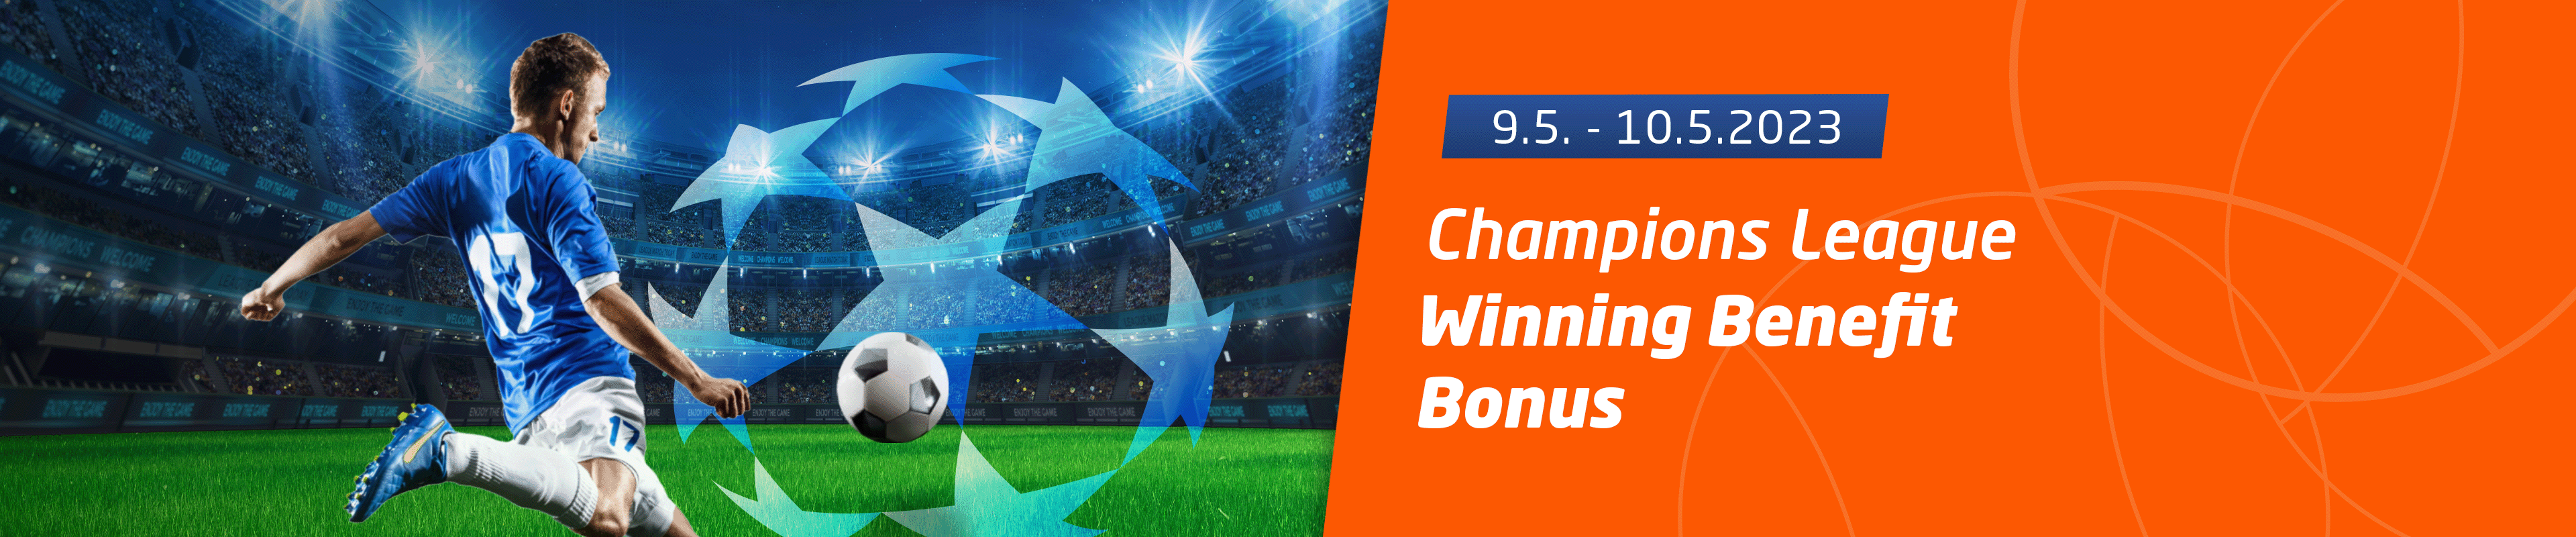 Champions League Winning Benefit Bonus